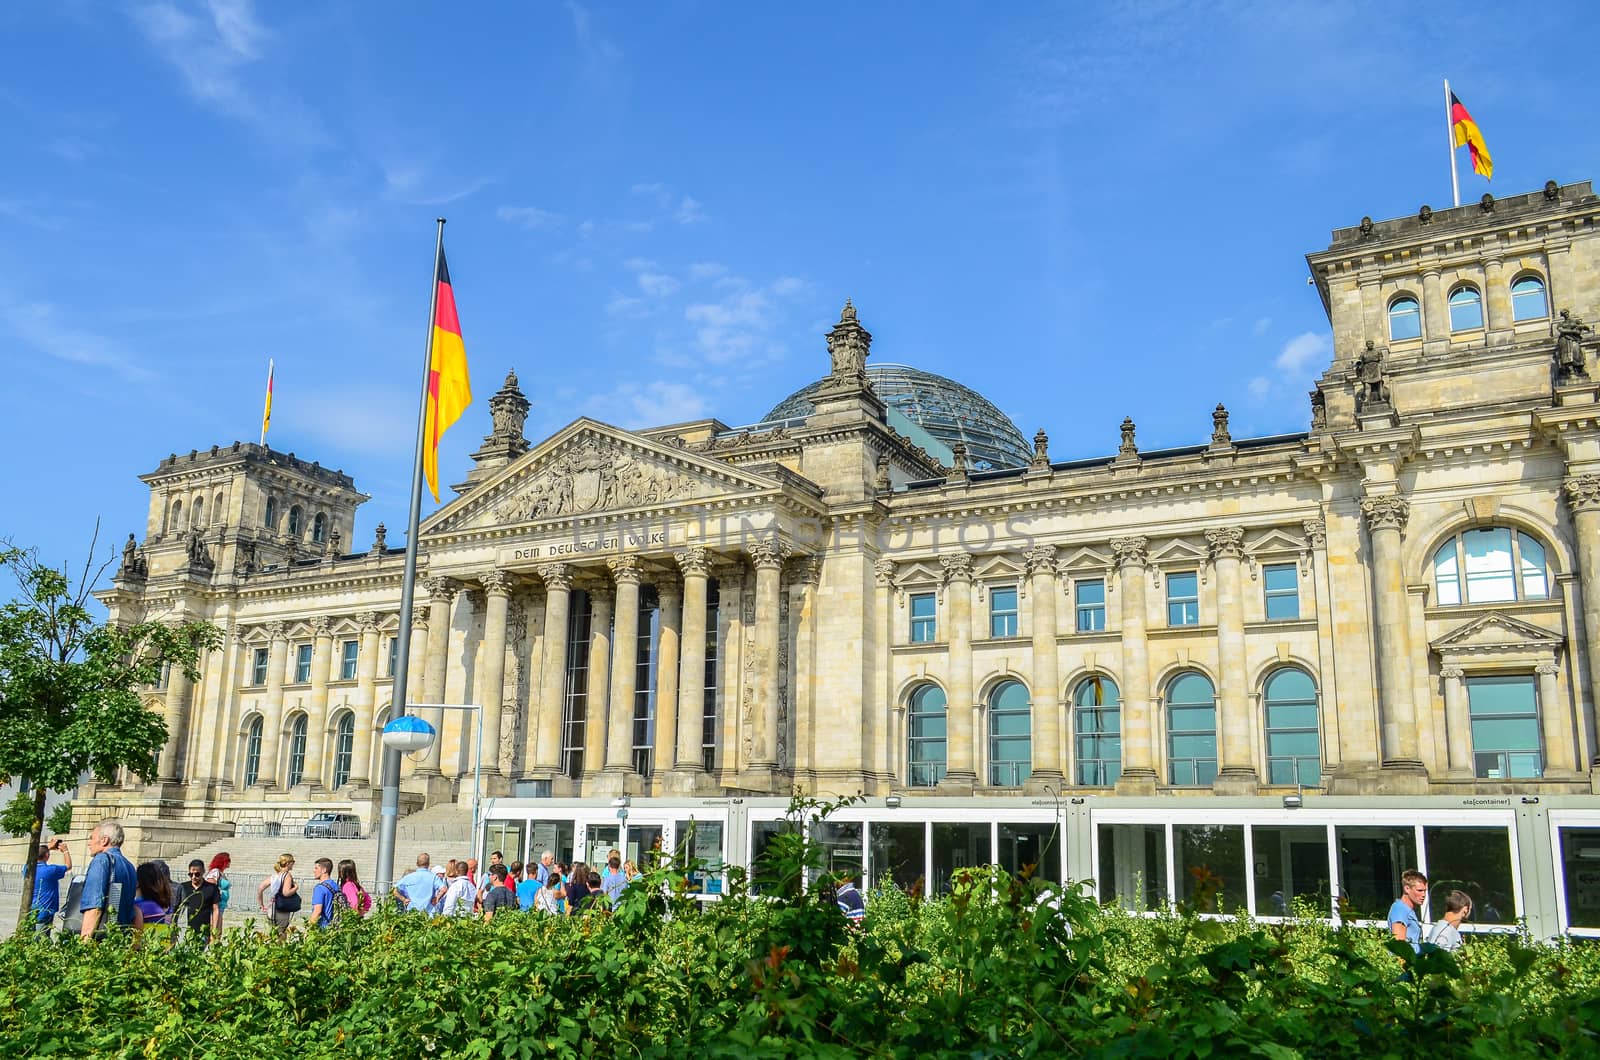 German parliament (Reichstag) building. Berlin, Germany, Europe by chernobrovin